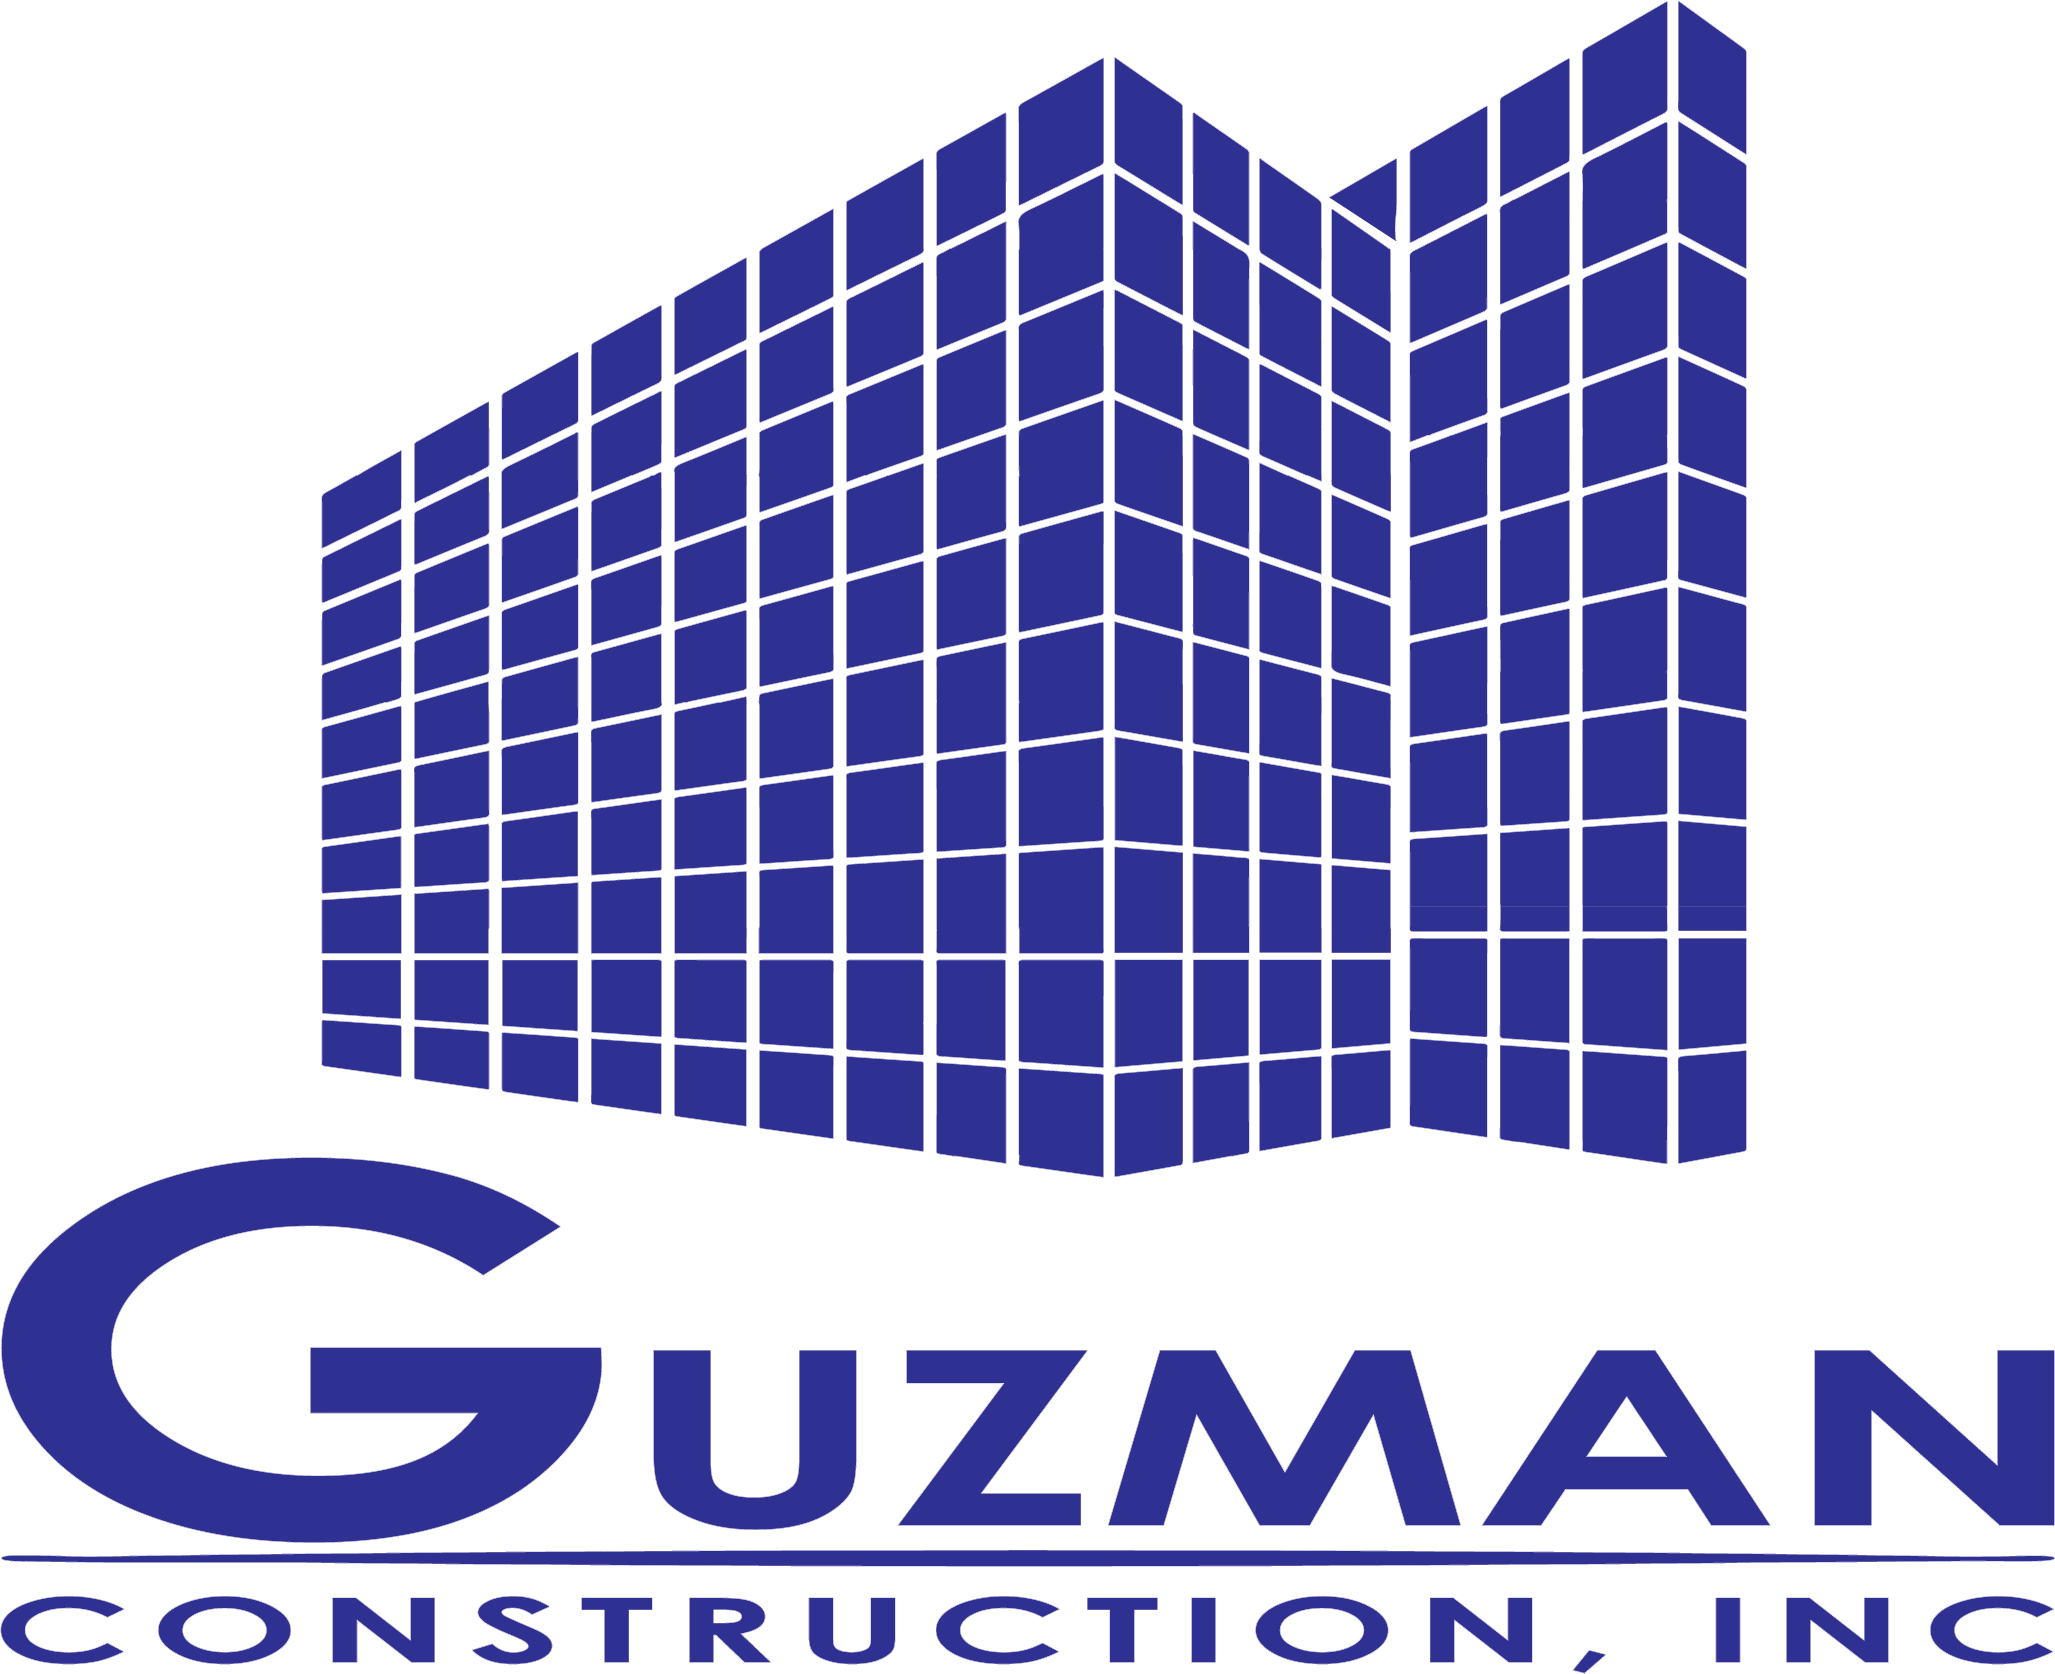 Guzman Construction